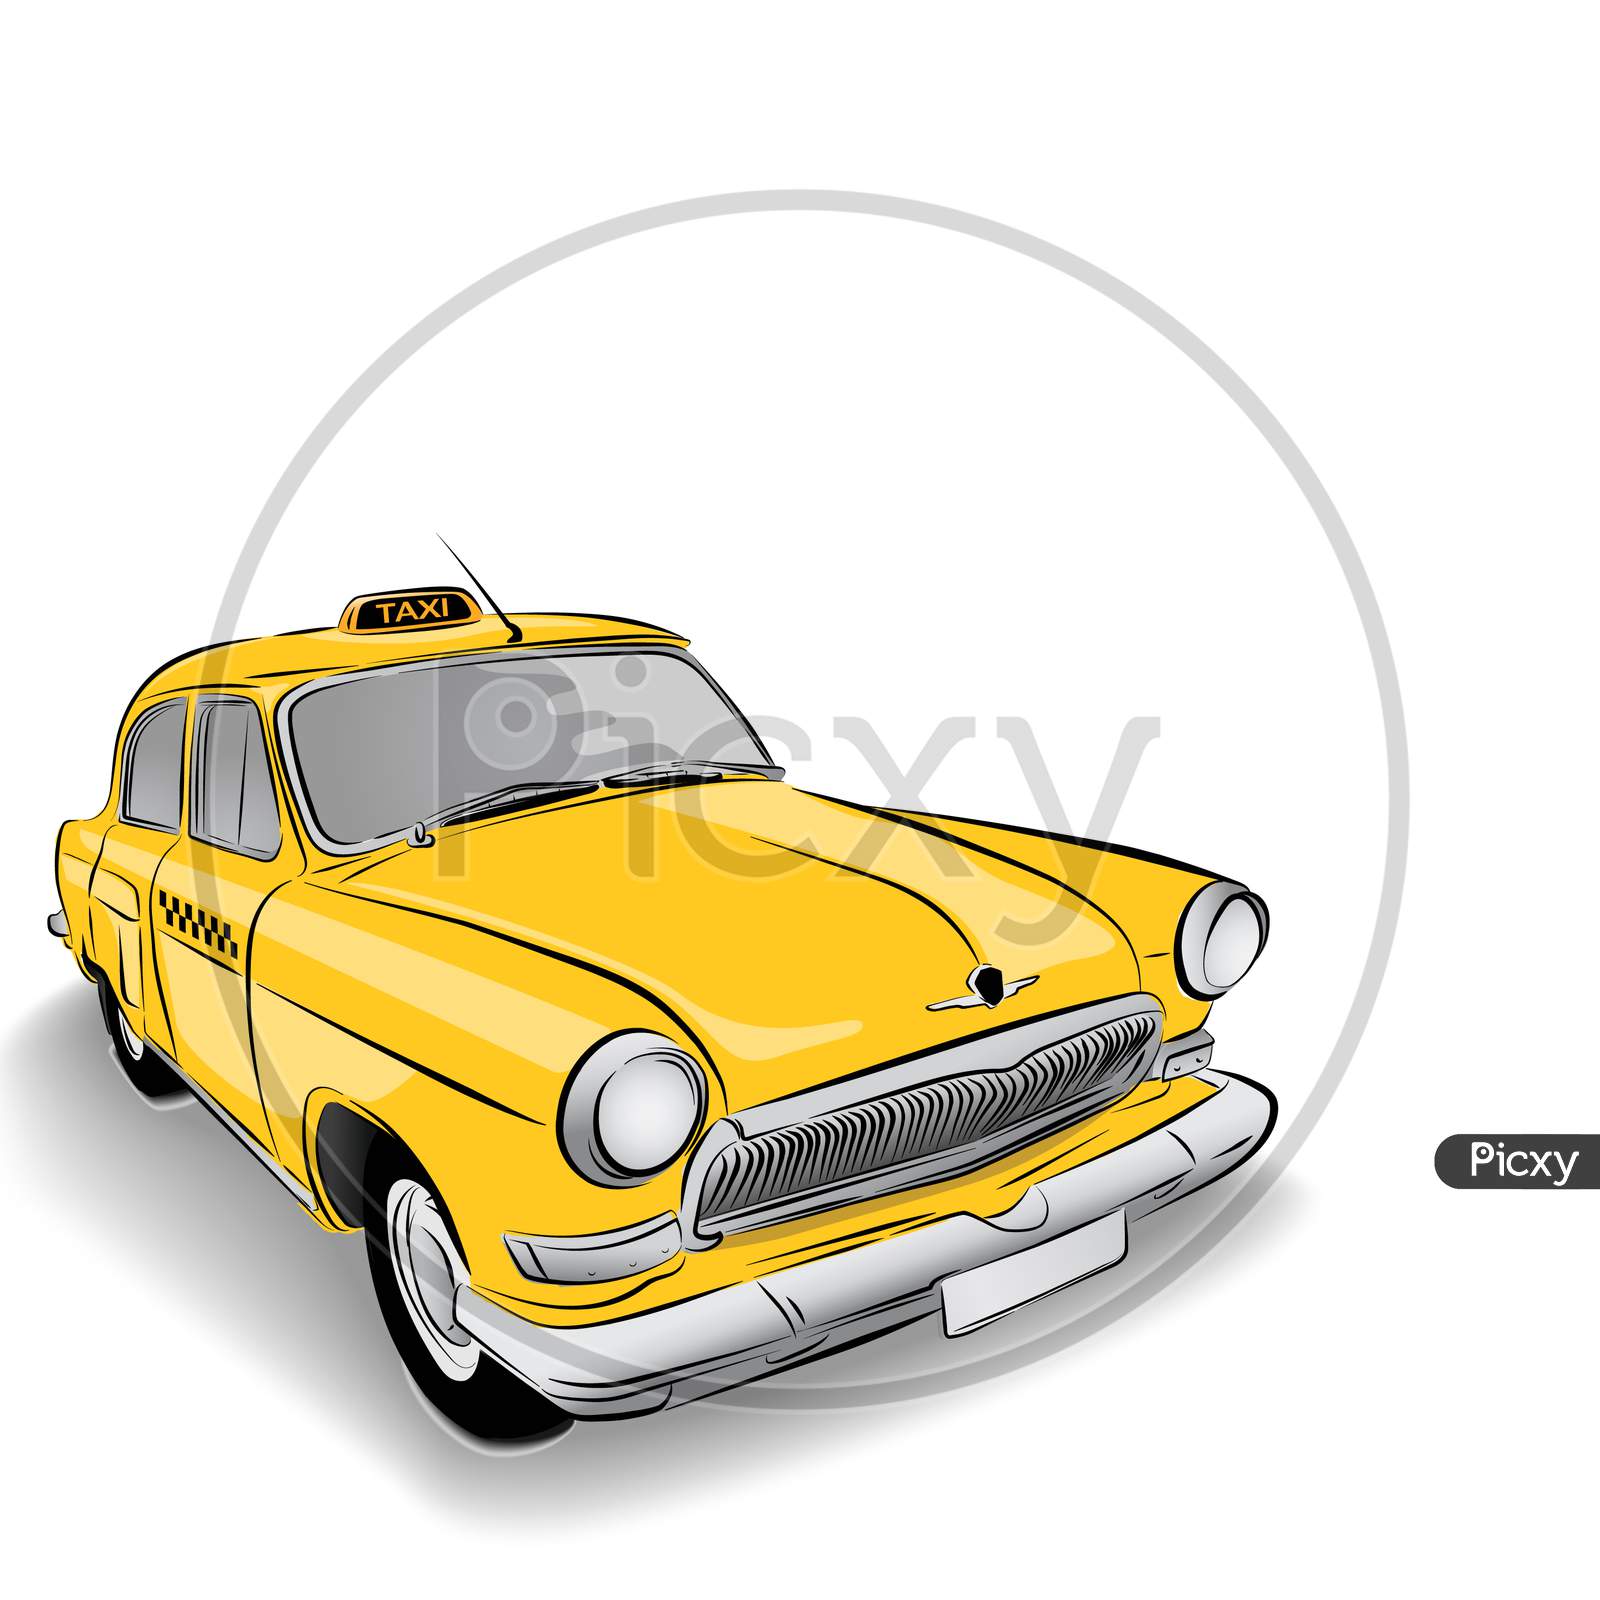 Yellow colour taxi car background white illustration art